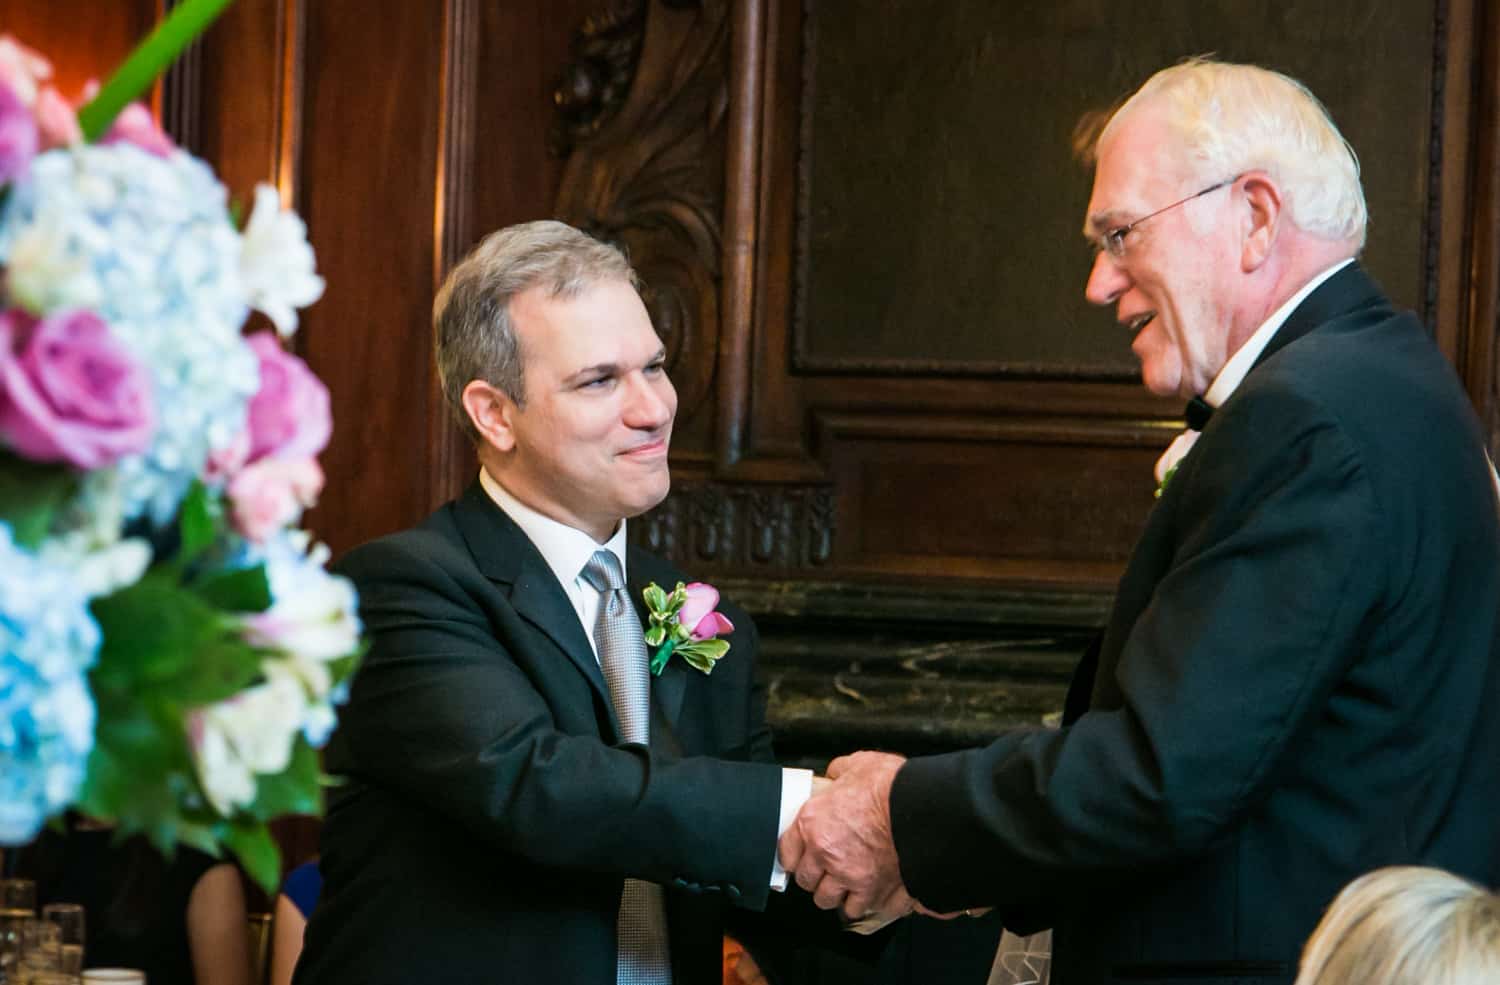 Groom shaking hands with older gentleman at Harvard Club wedding